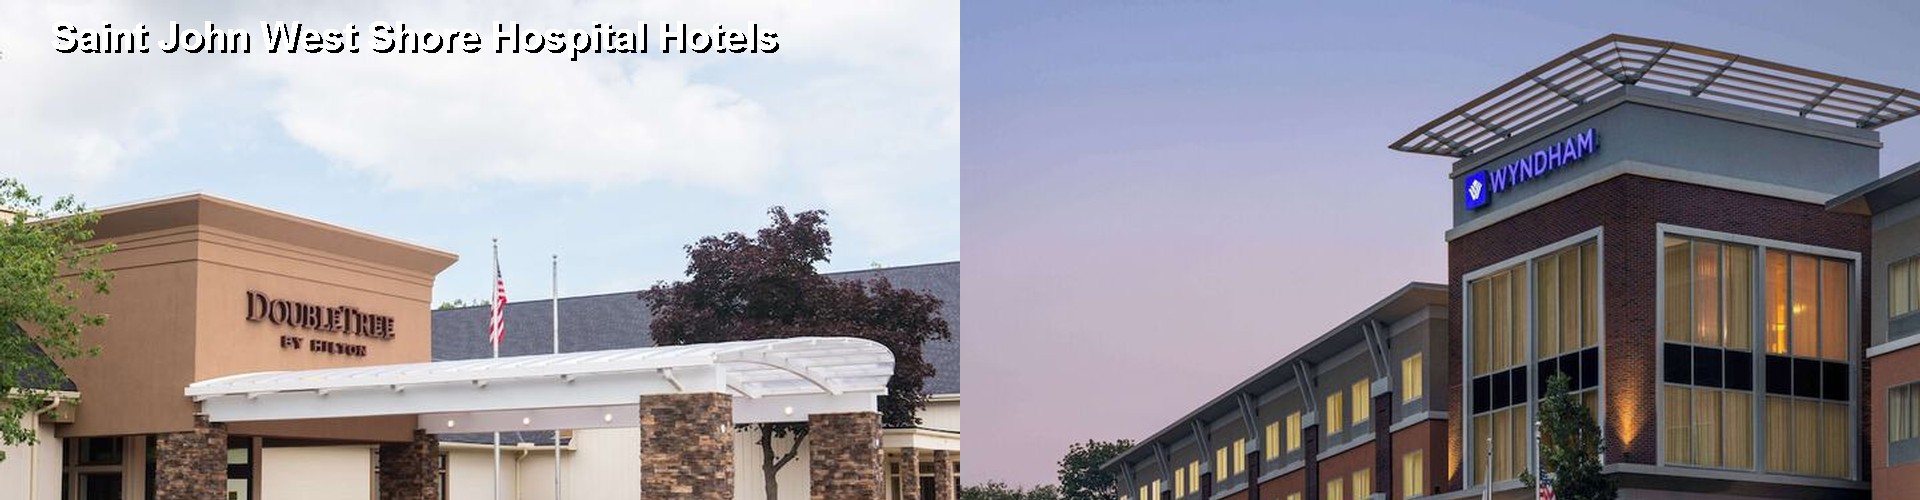 5 Best Hotels near Saint John West Shore Hospital